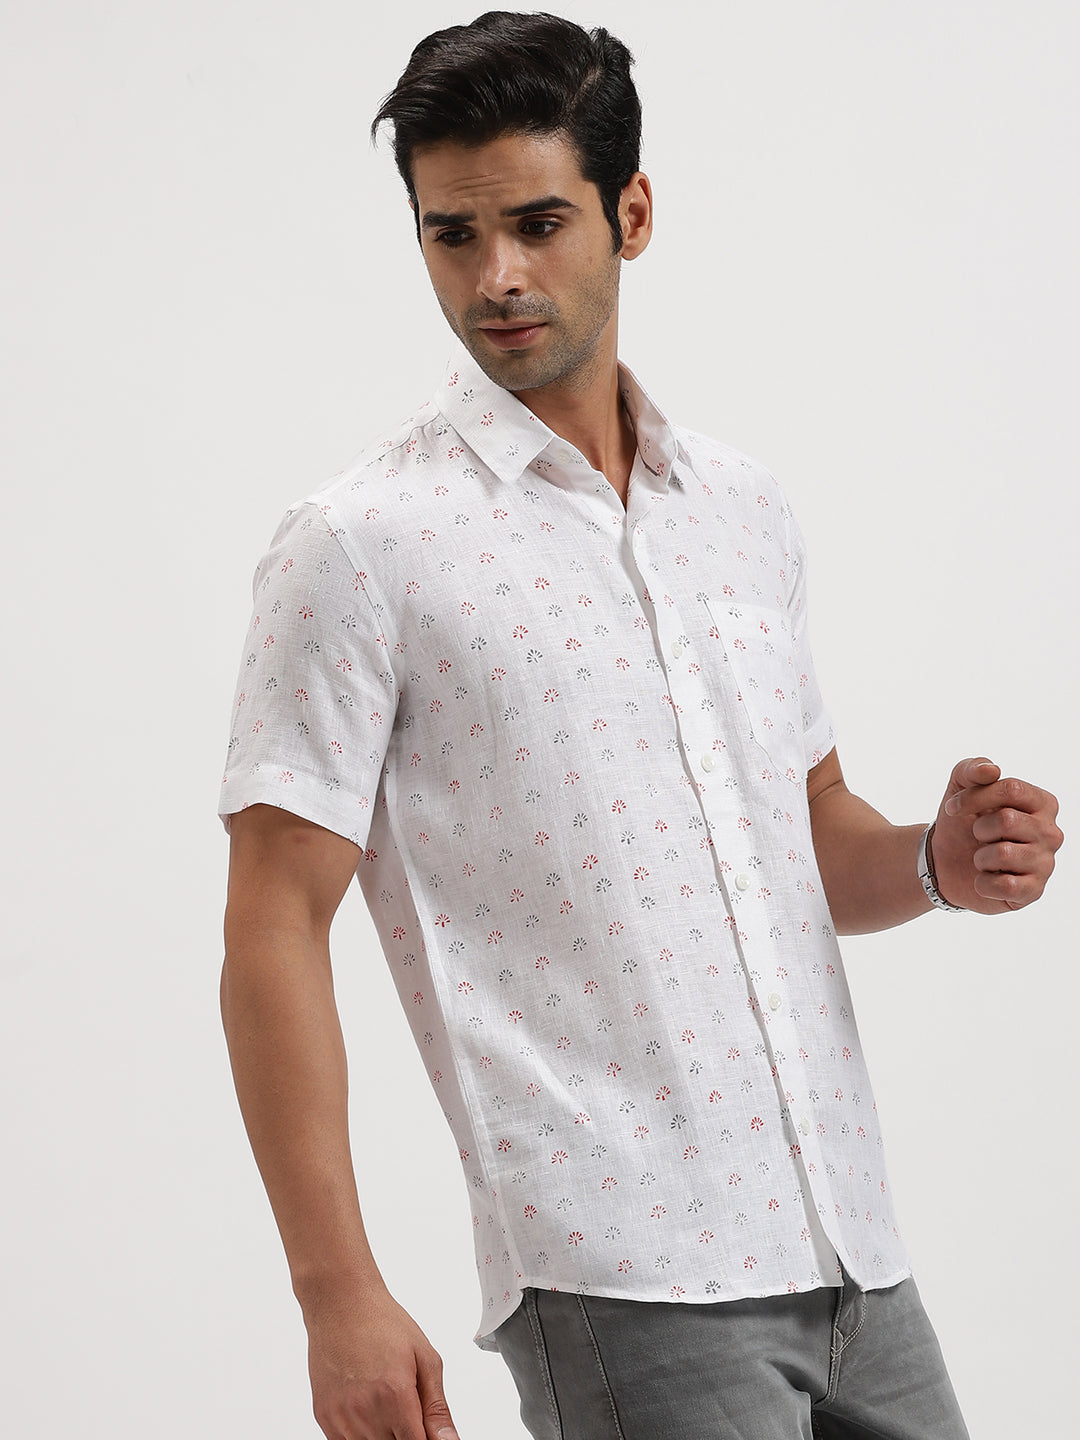 Adam - Pure Linen Block Printed Half Sleeve Shirt - Red, Grey & White